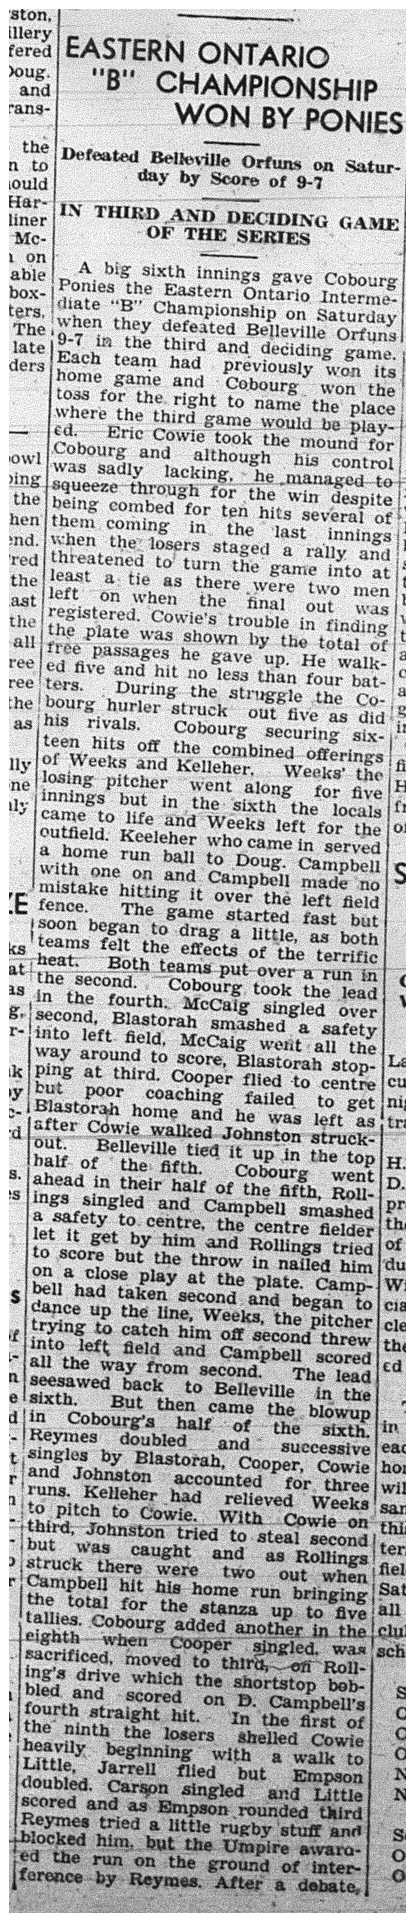 1939-09-21 Baseball -Intermediate Ponies vs Belleville-Championship Game